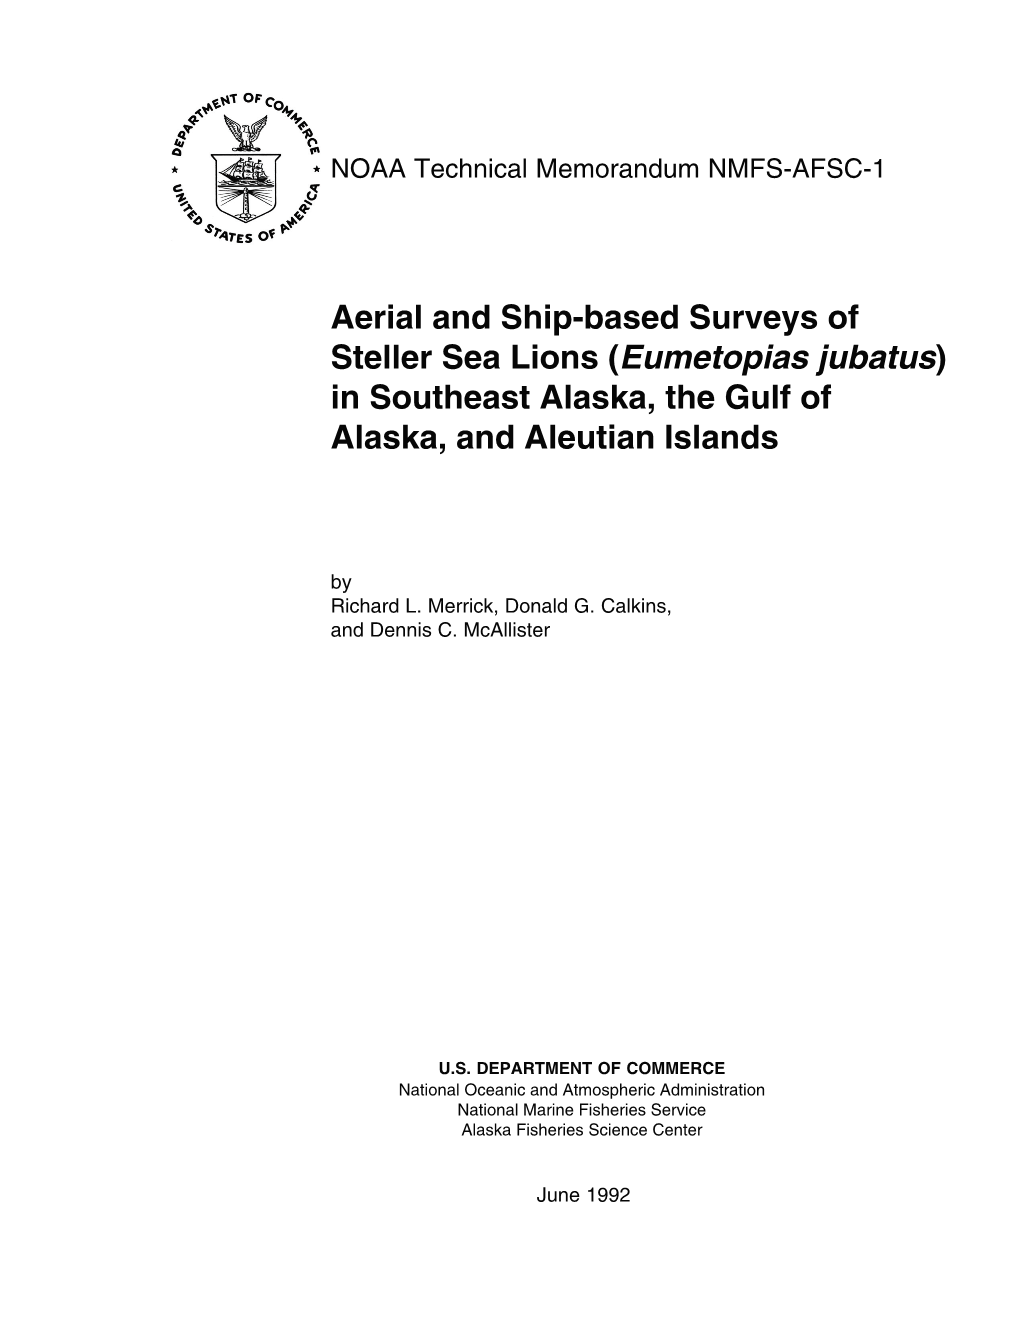 Aerial and Ship-Based Surveys of Steller Sea Lions (Eumetopias Jubatus) in Southeast Alaska, the Gulf of Alaska, and Aleutian Islands